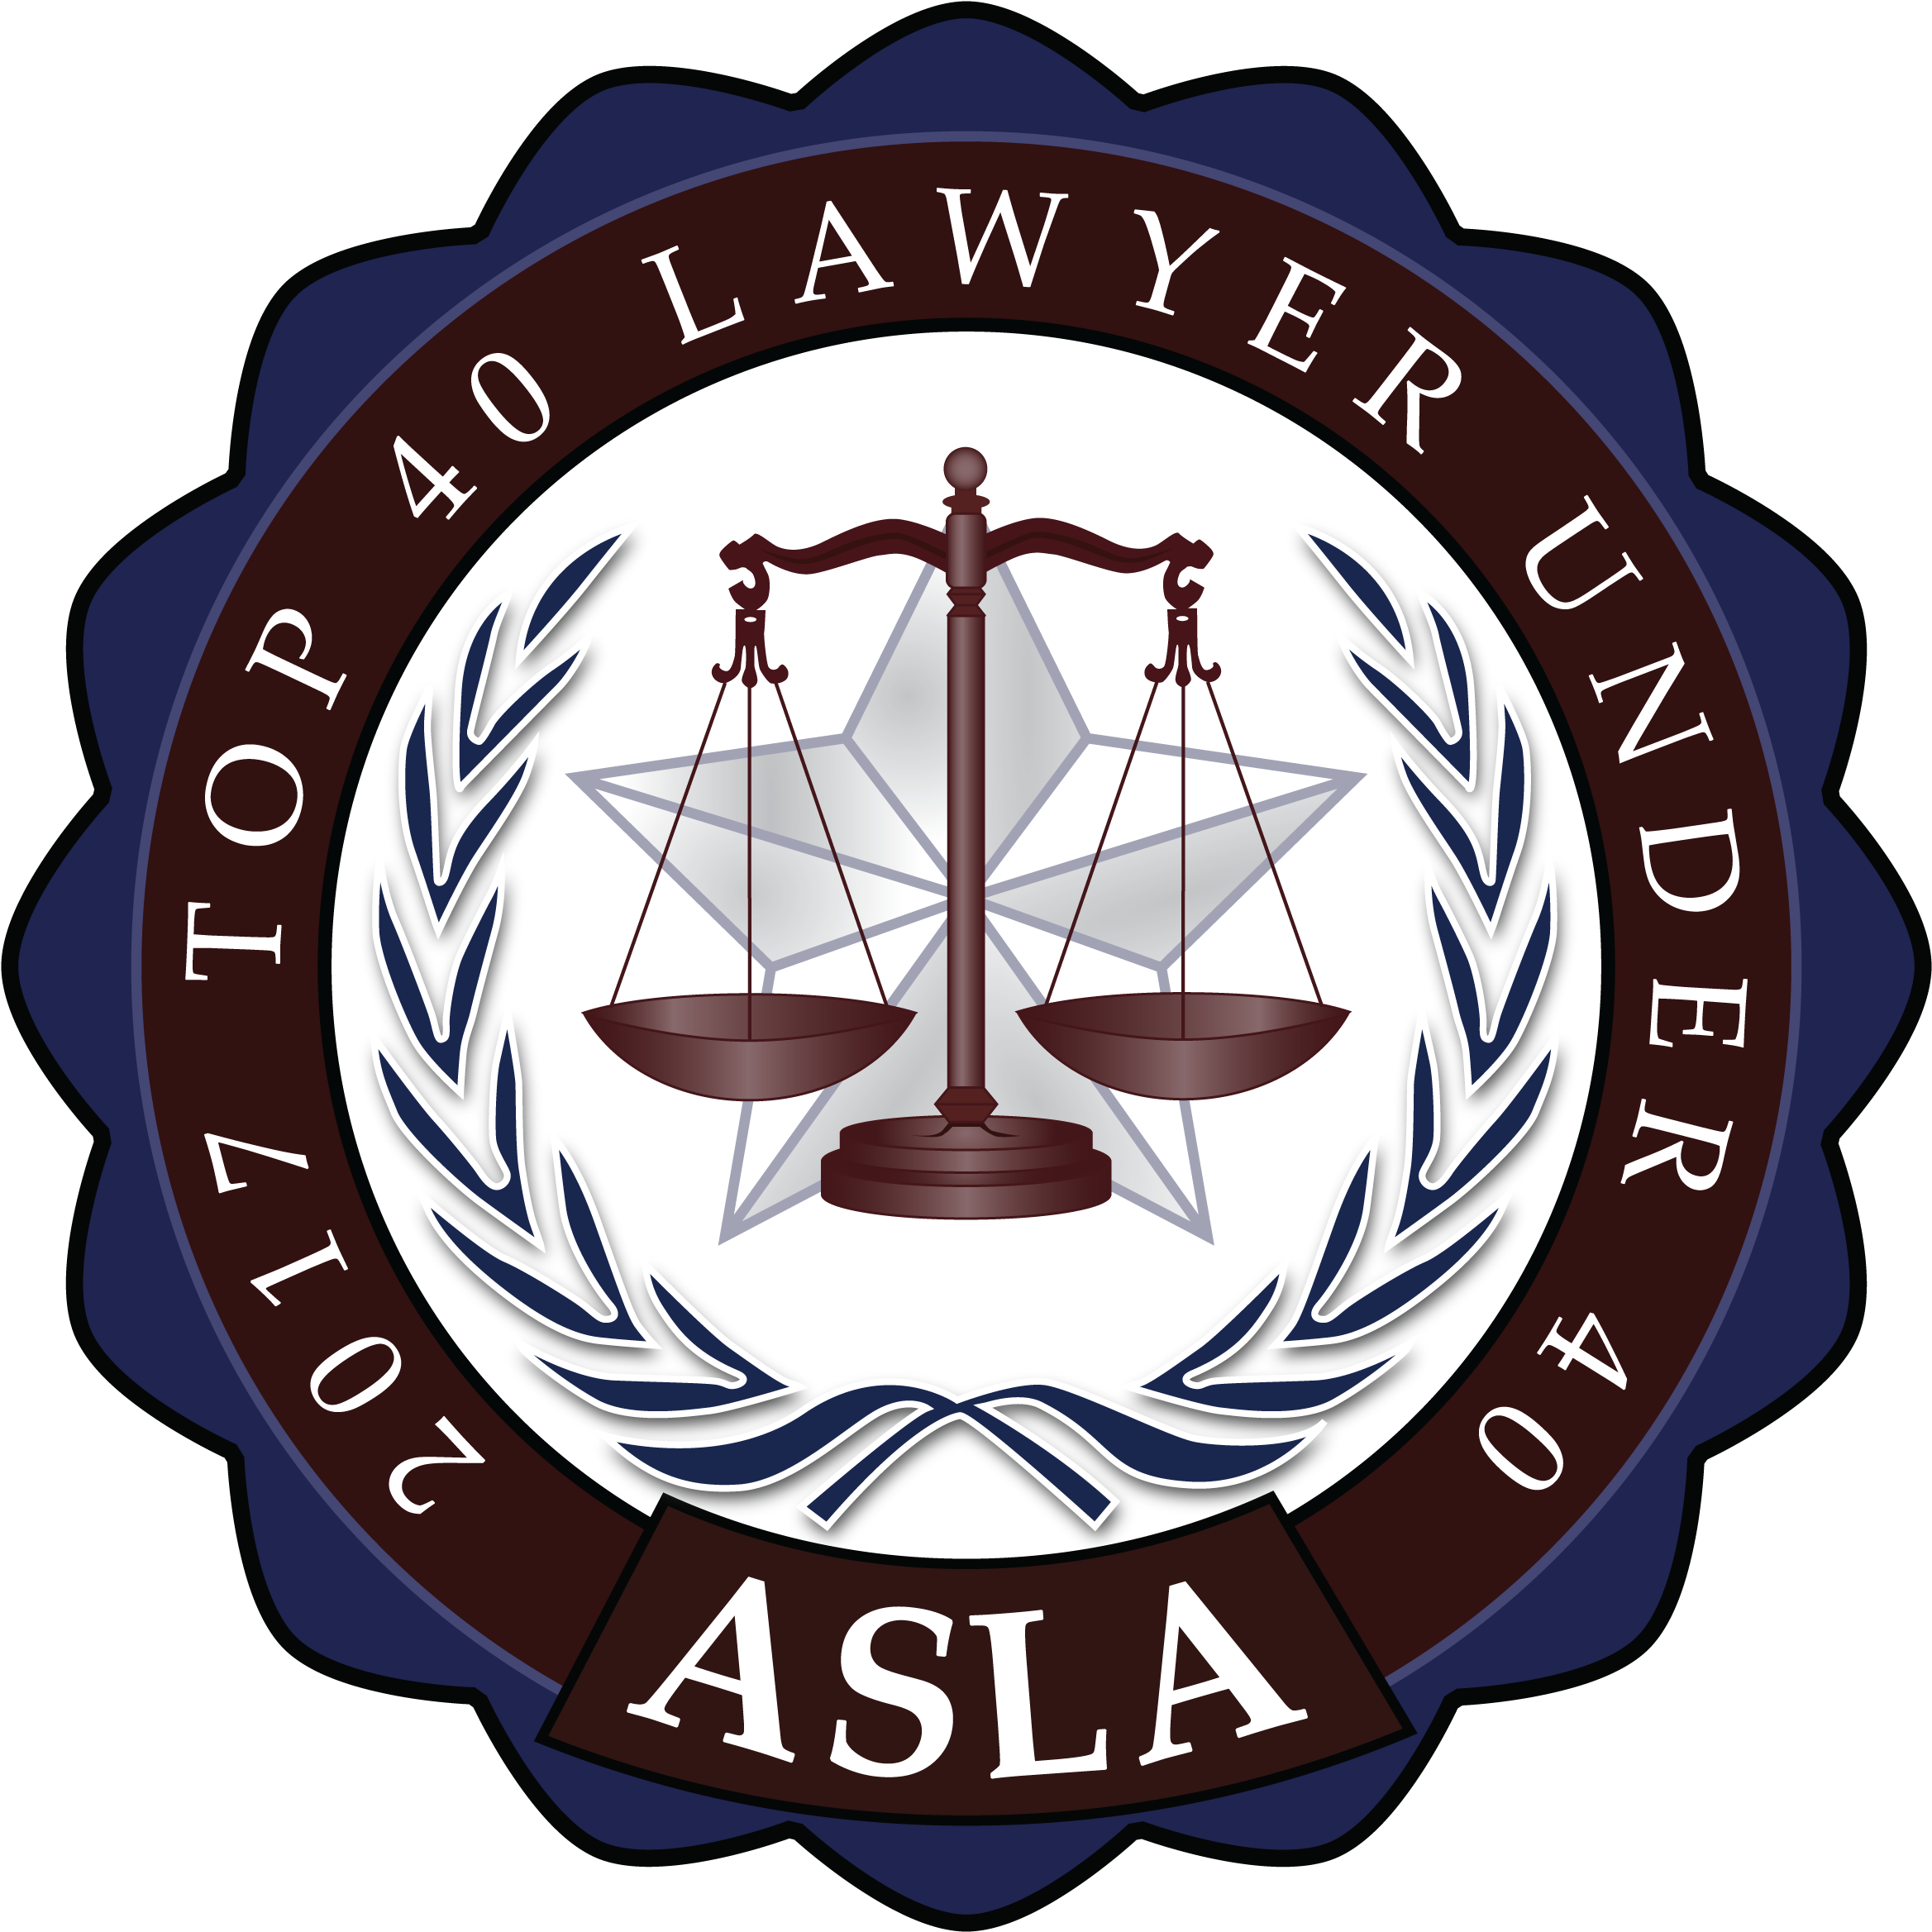 Societyoflegaladvocates - Asla Logo 2017 Top Attorney (2406x2406)